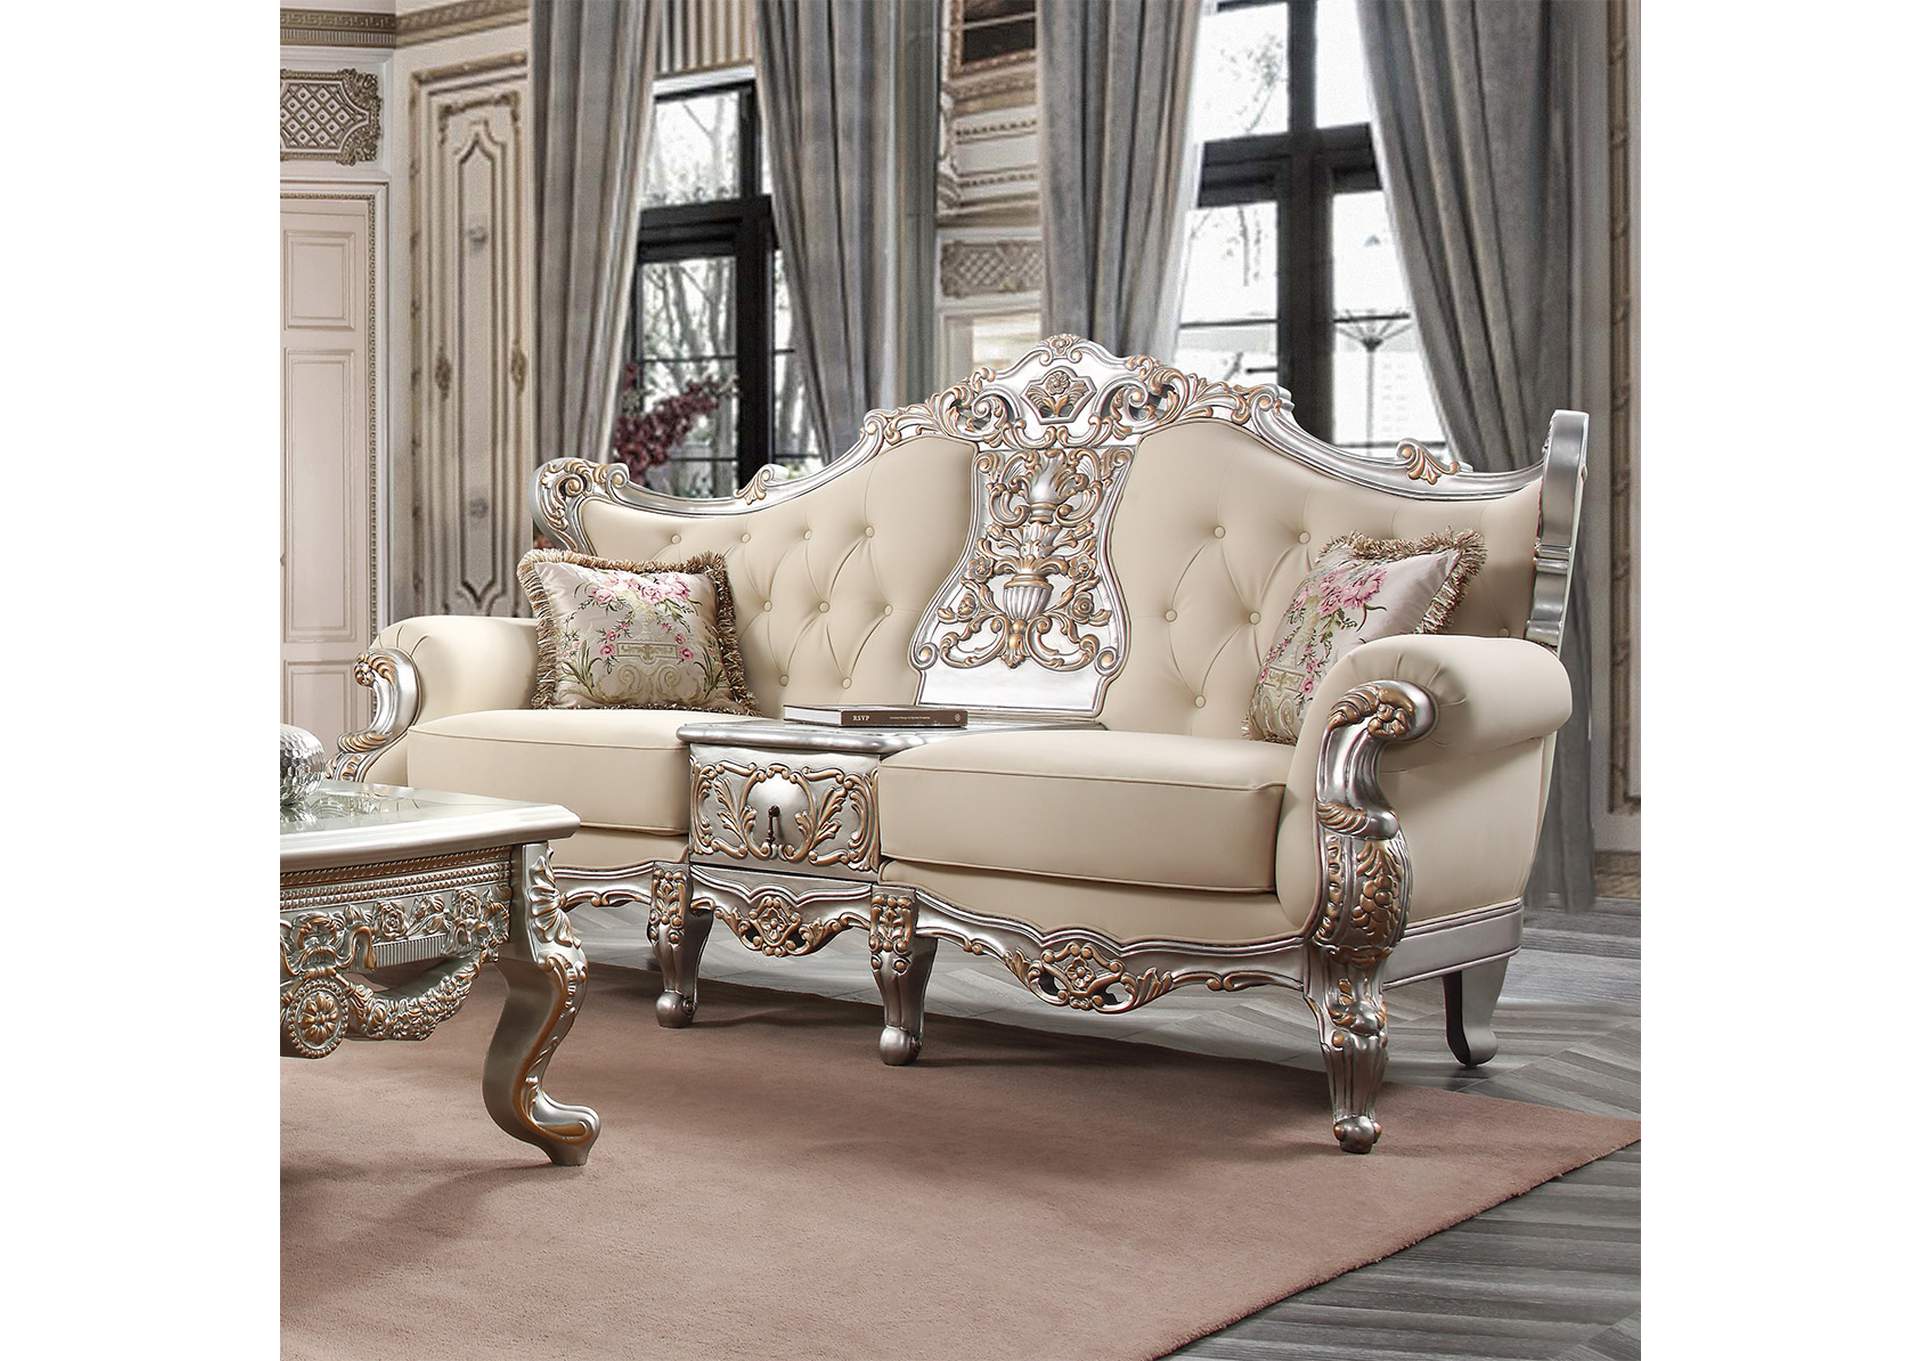 Metallic Silver With Antique Gold Trim 3 Piece French Salon Sofa Set,Homey Design